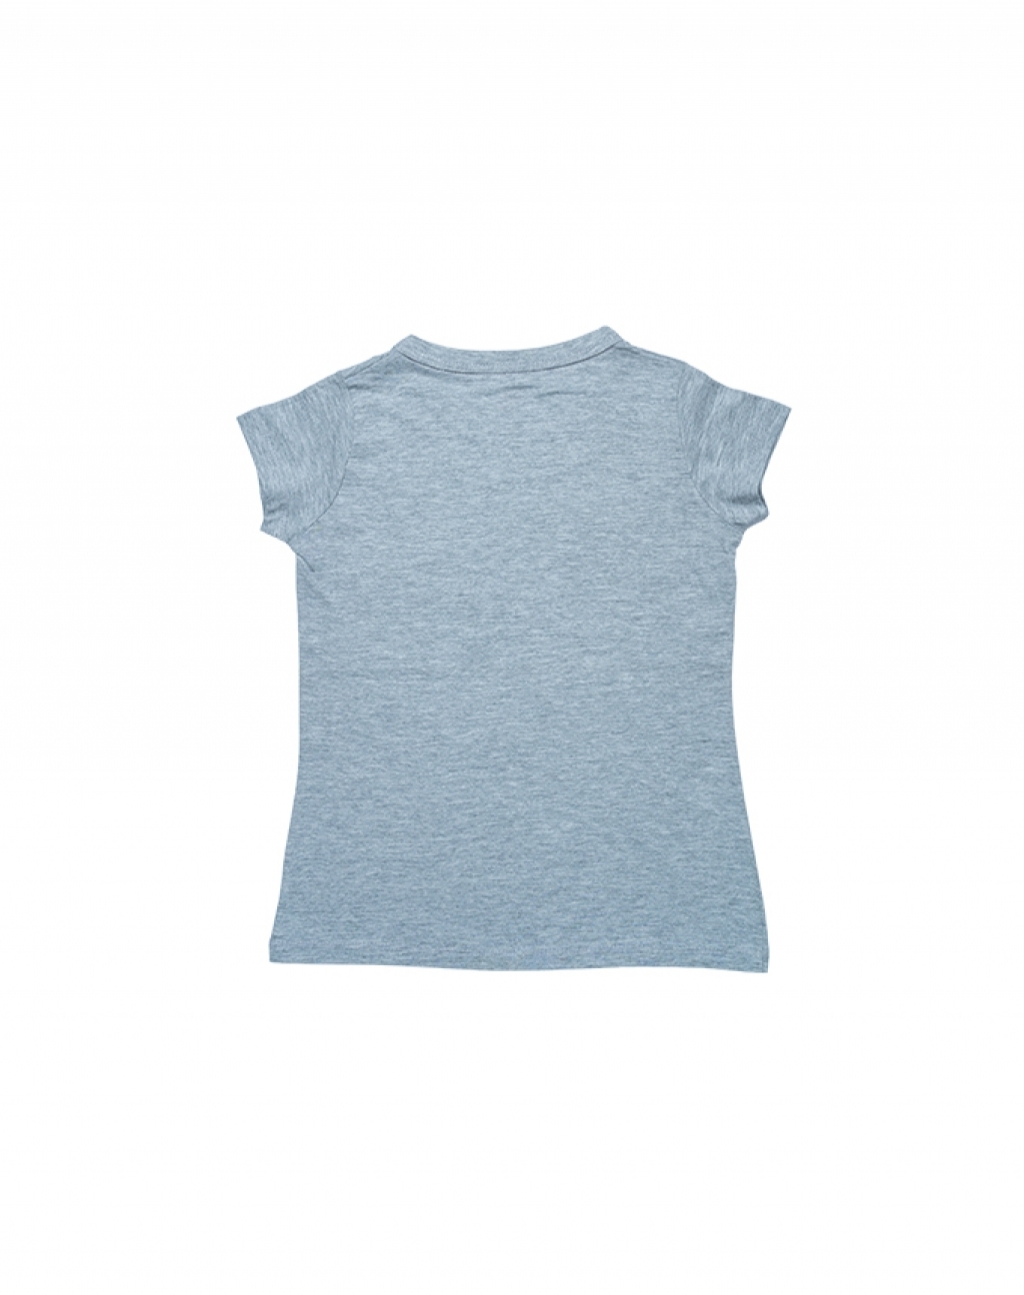 Buy AllureP Girls T-Shirt Brave Grey in Pakistan | online shopping in ...